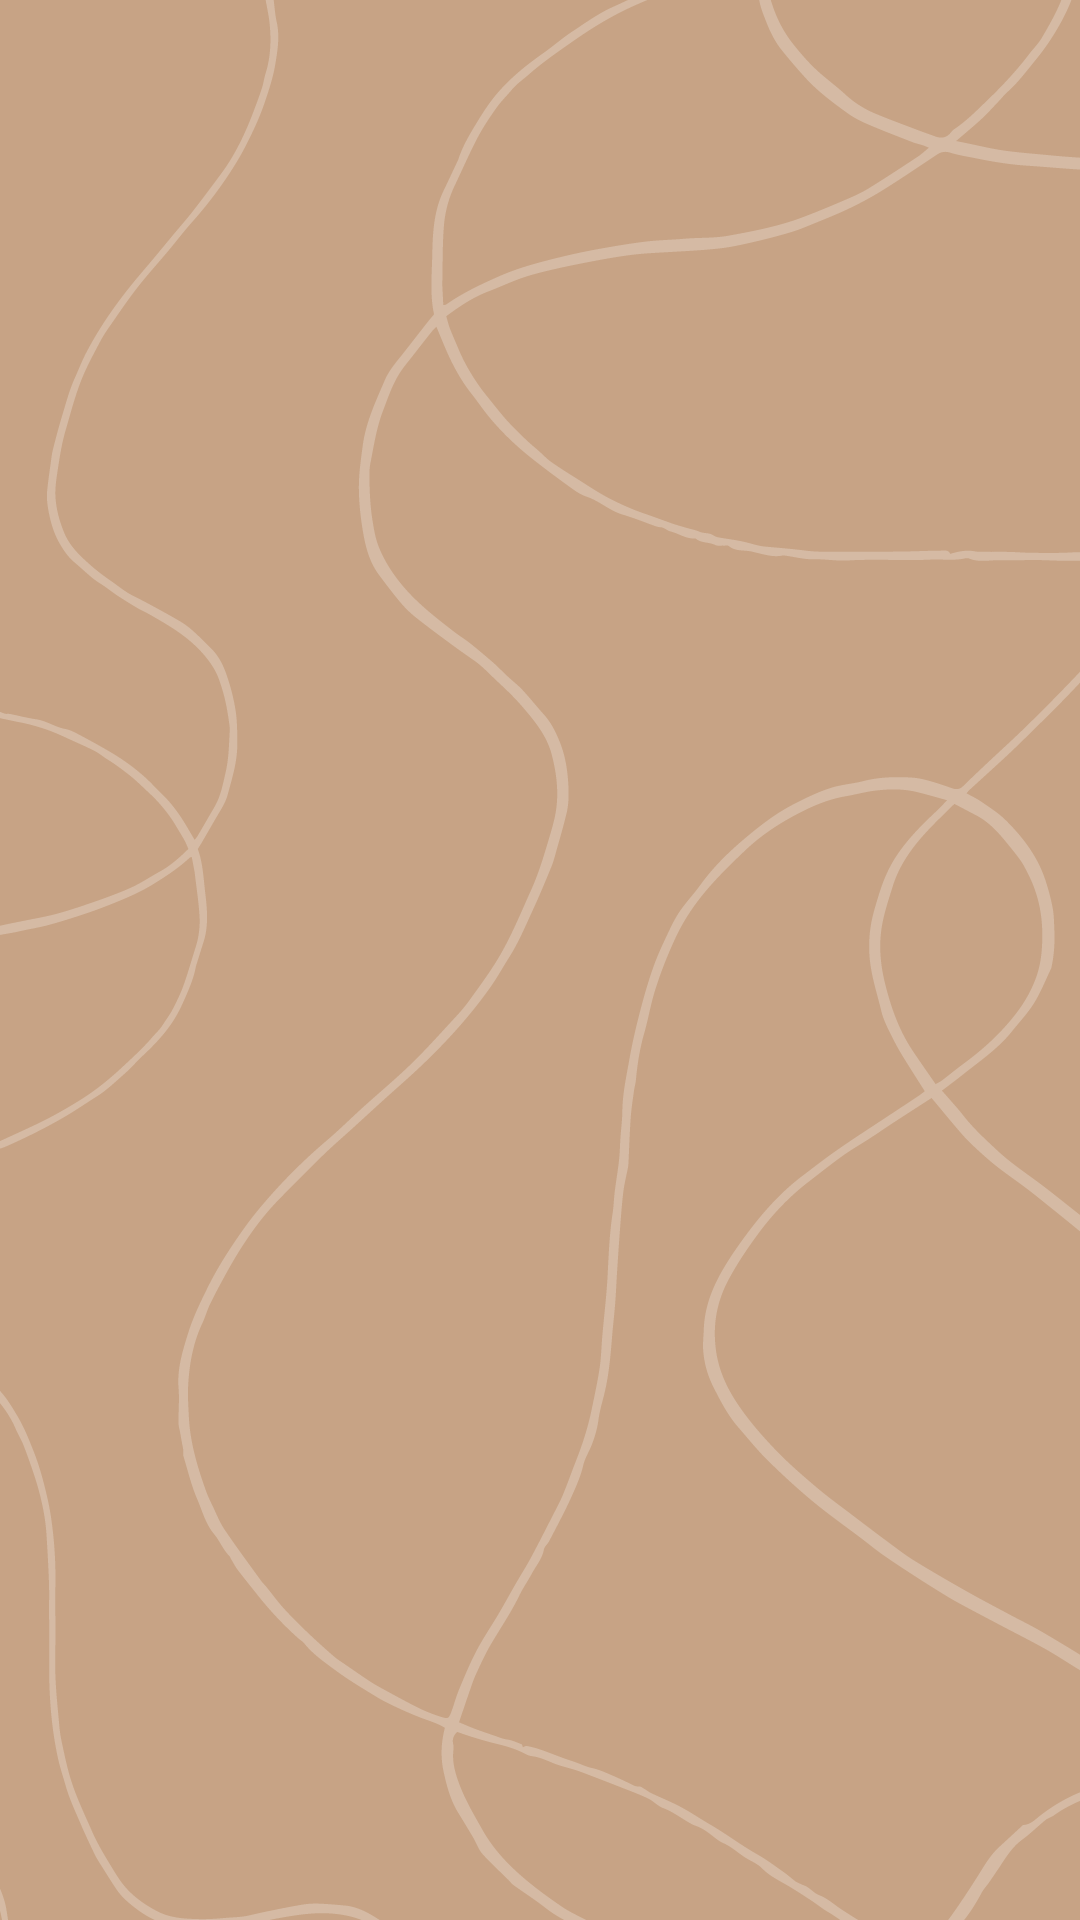 Minimalist brown wallpapers